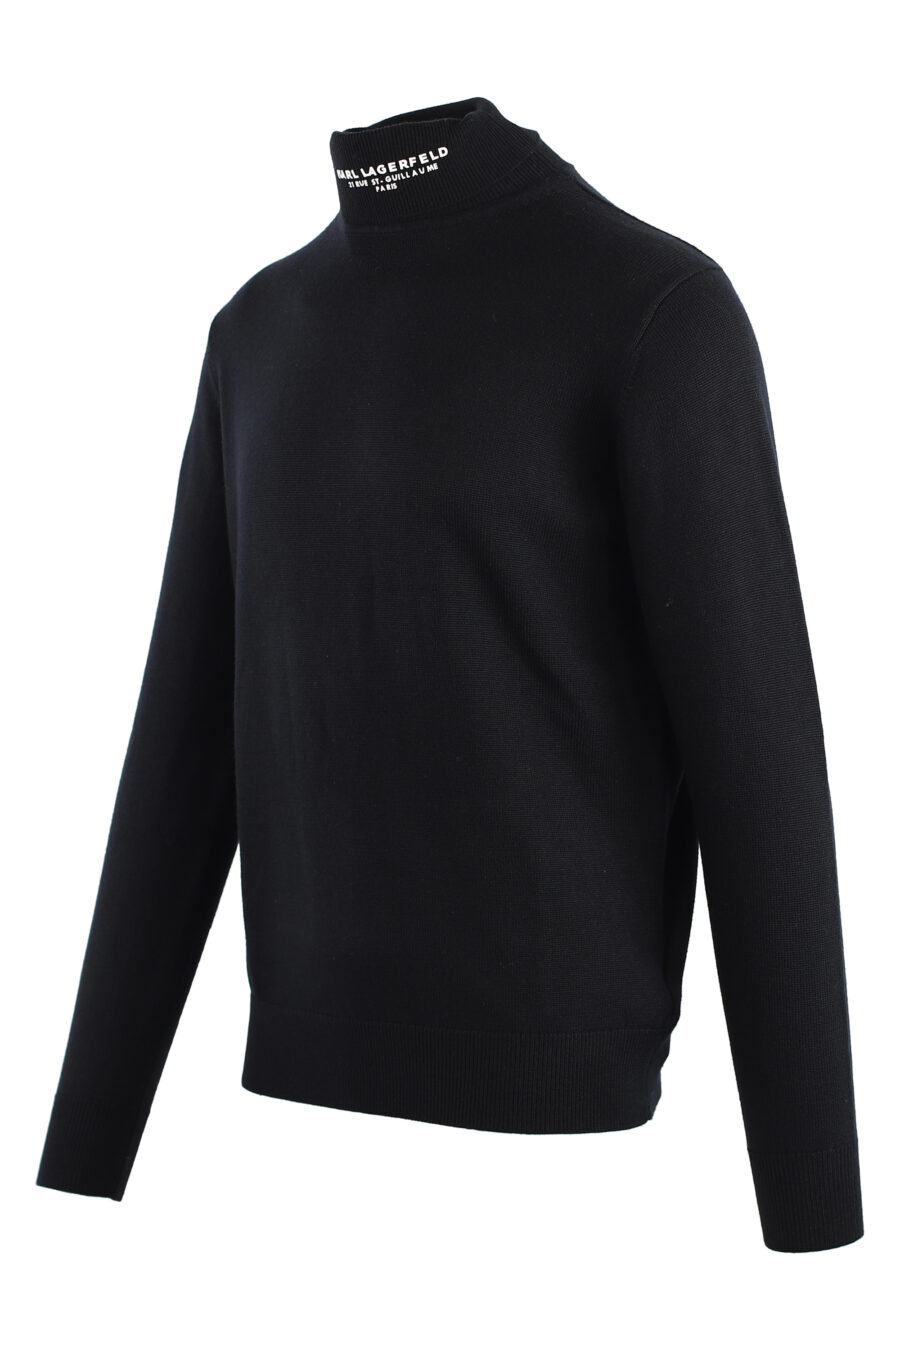 Black turtleneck jumper with logo on collar - IMG 7553